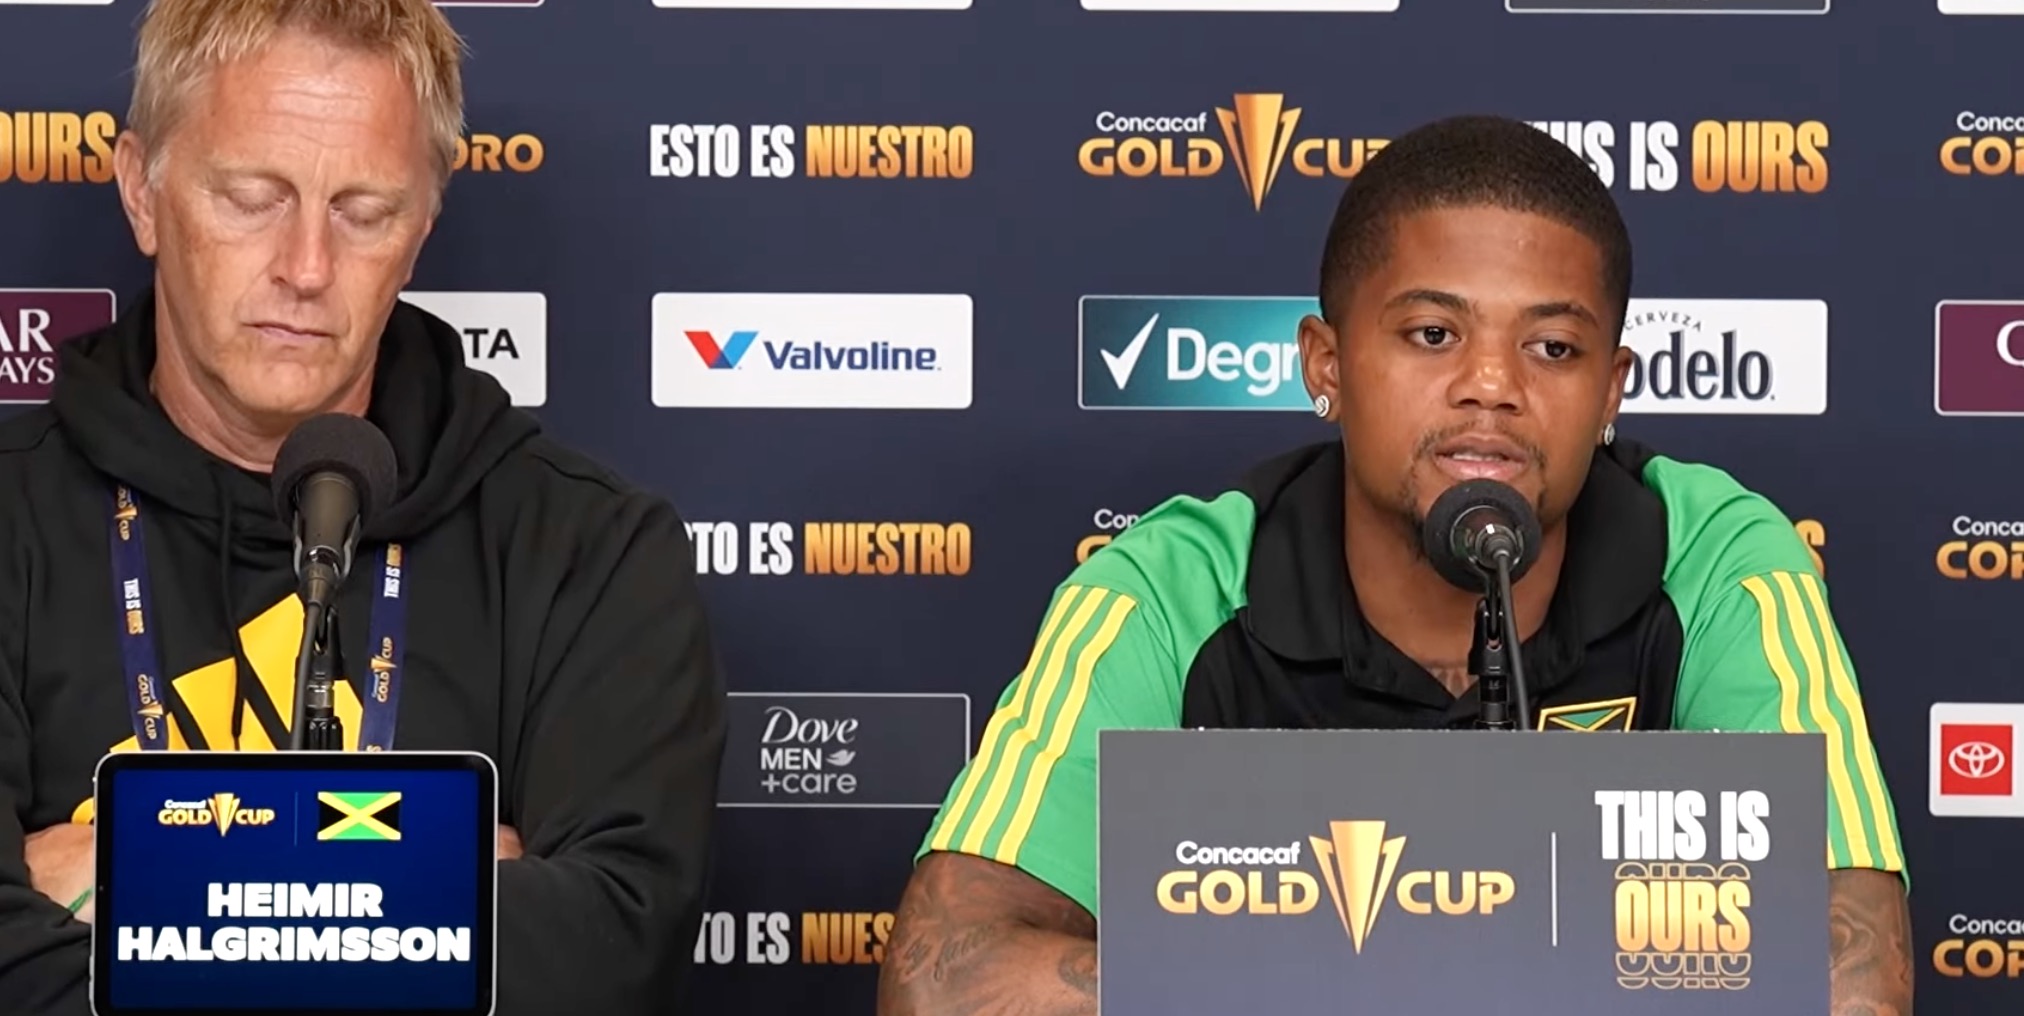 Leon Bailey and Coach Hallgrimsson Talks Upcoming Match vs. Trinidad - Watch Interview